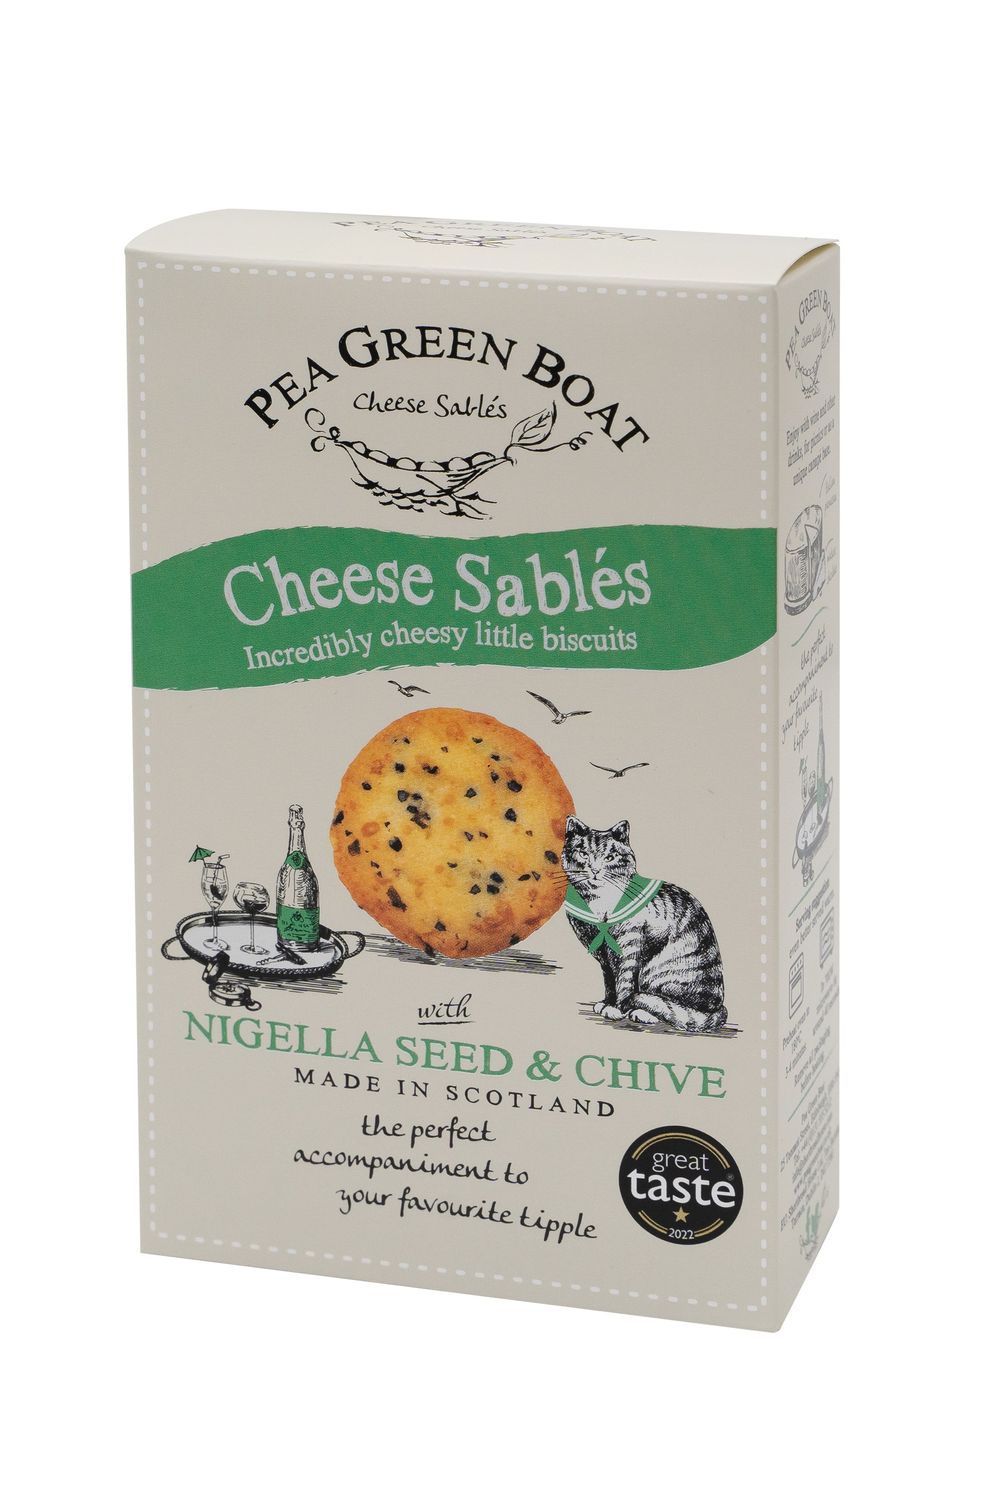 Cheese Sablés - Nigella Seed & Chive